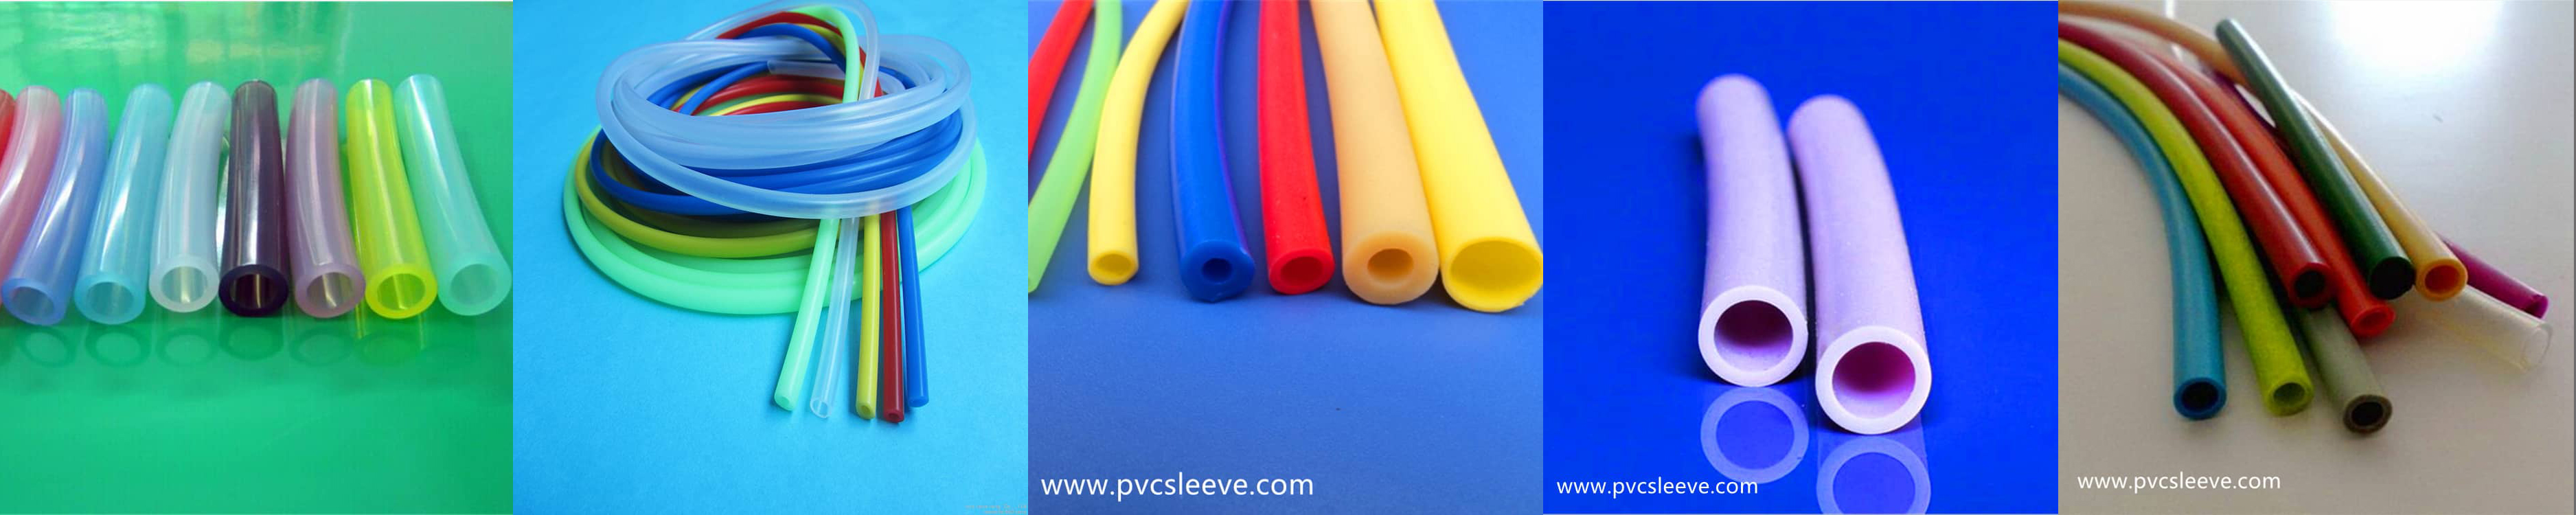 Colored silicone tube